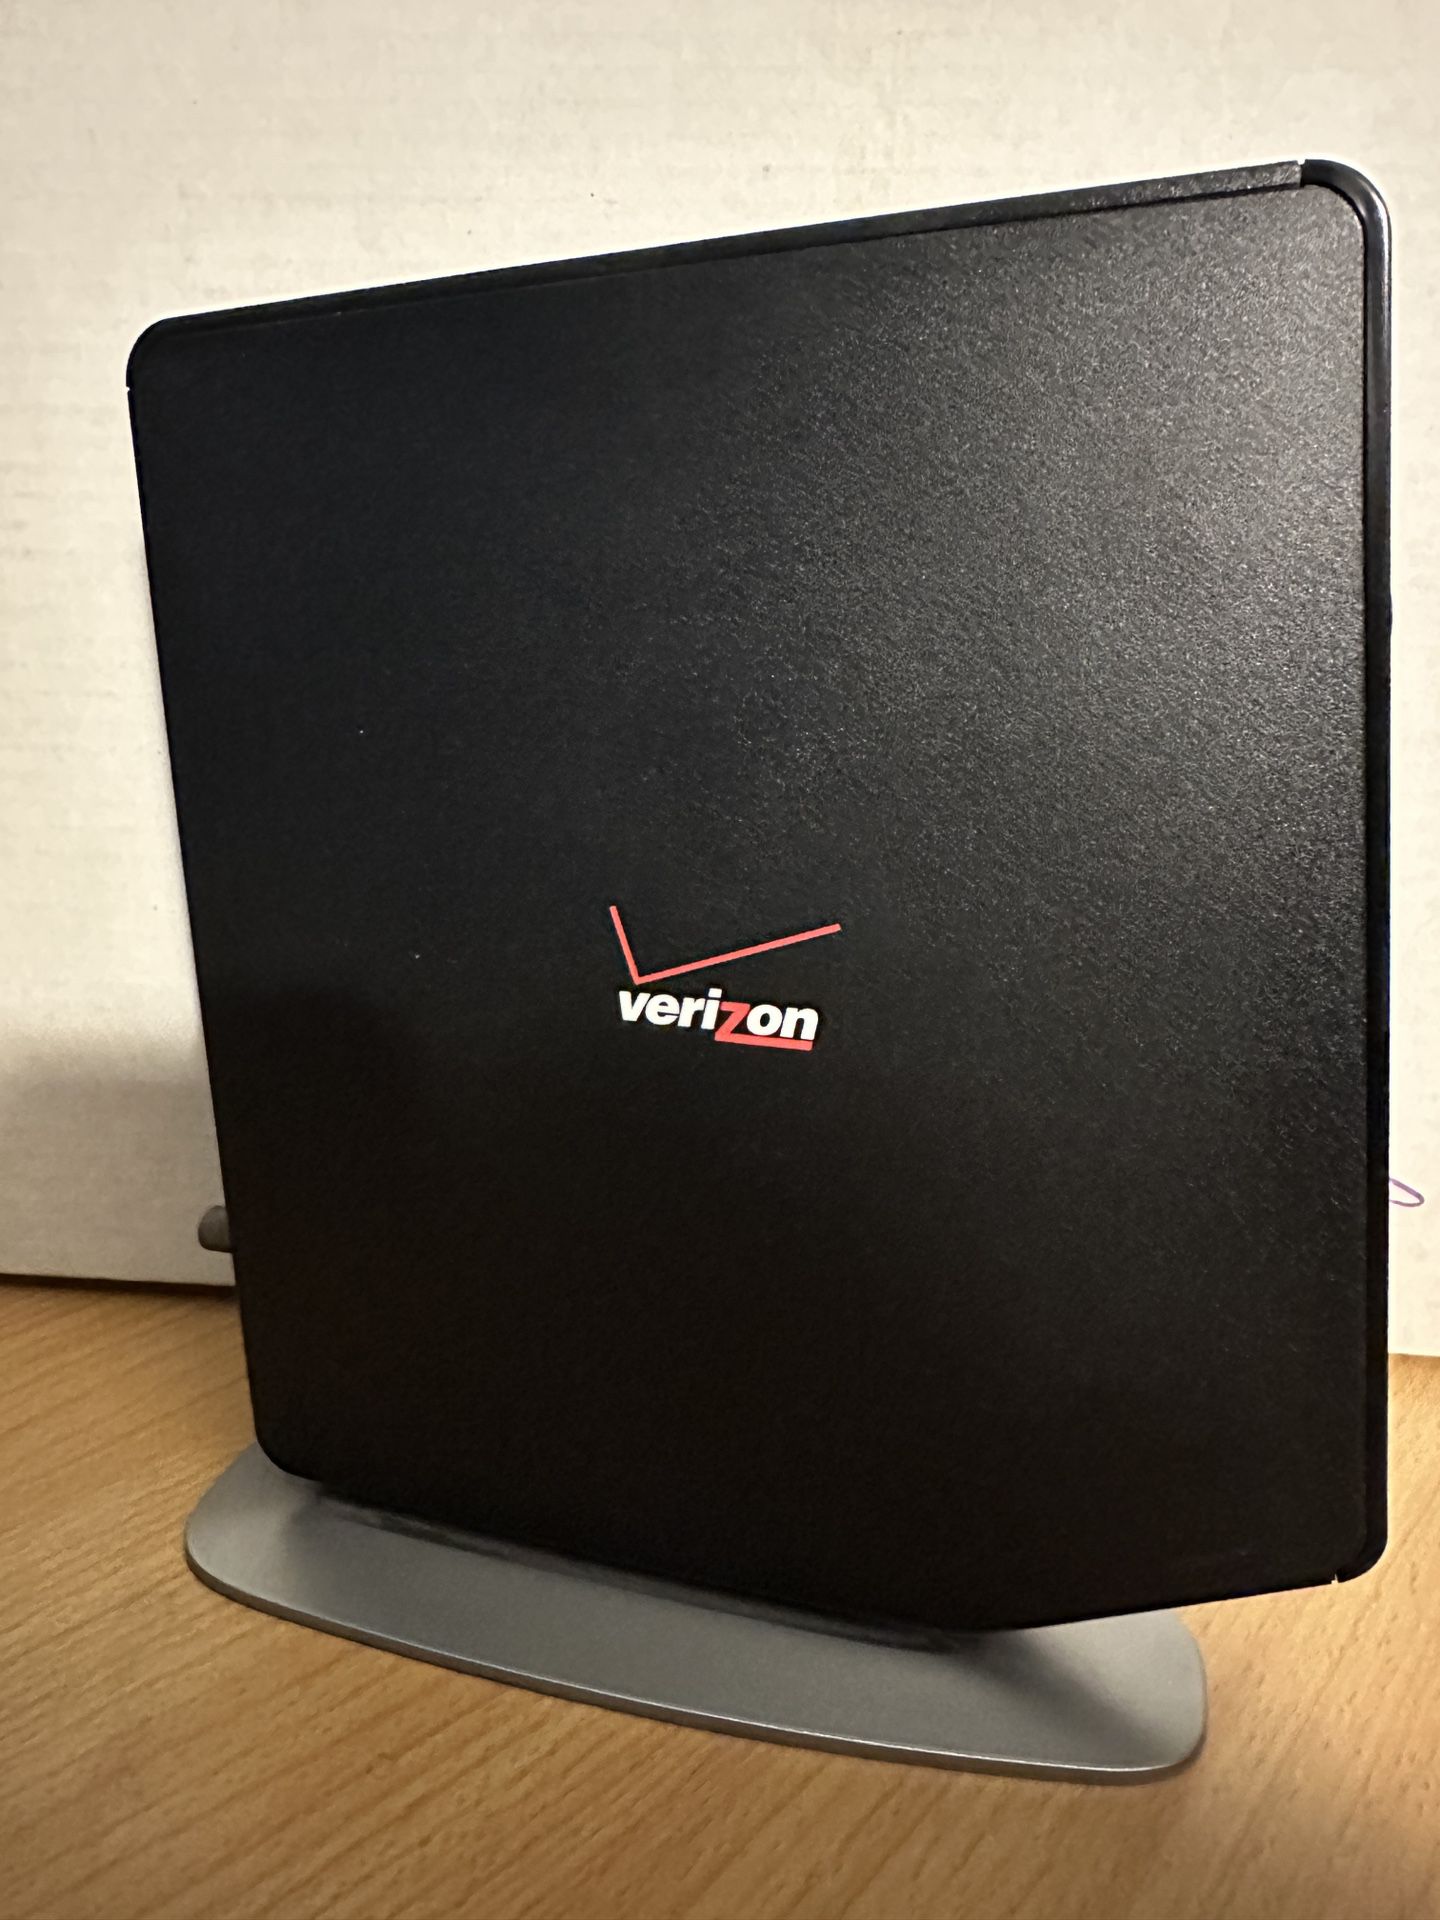 Verizon Fios Quantum Gateway FiOS-G1100 - Wireless router - 4-port 